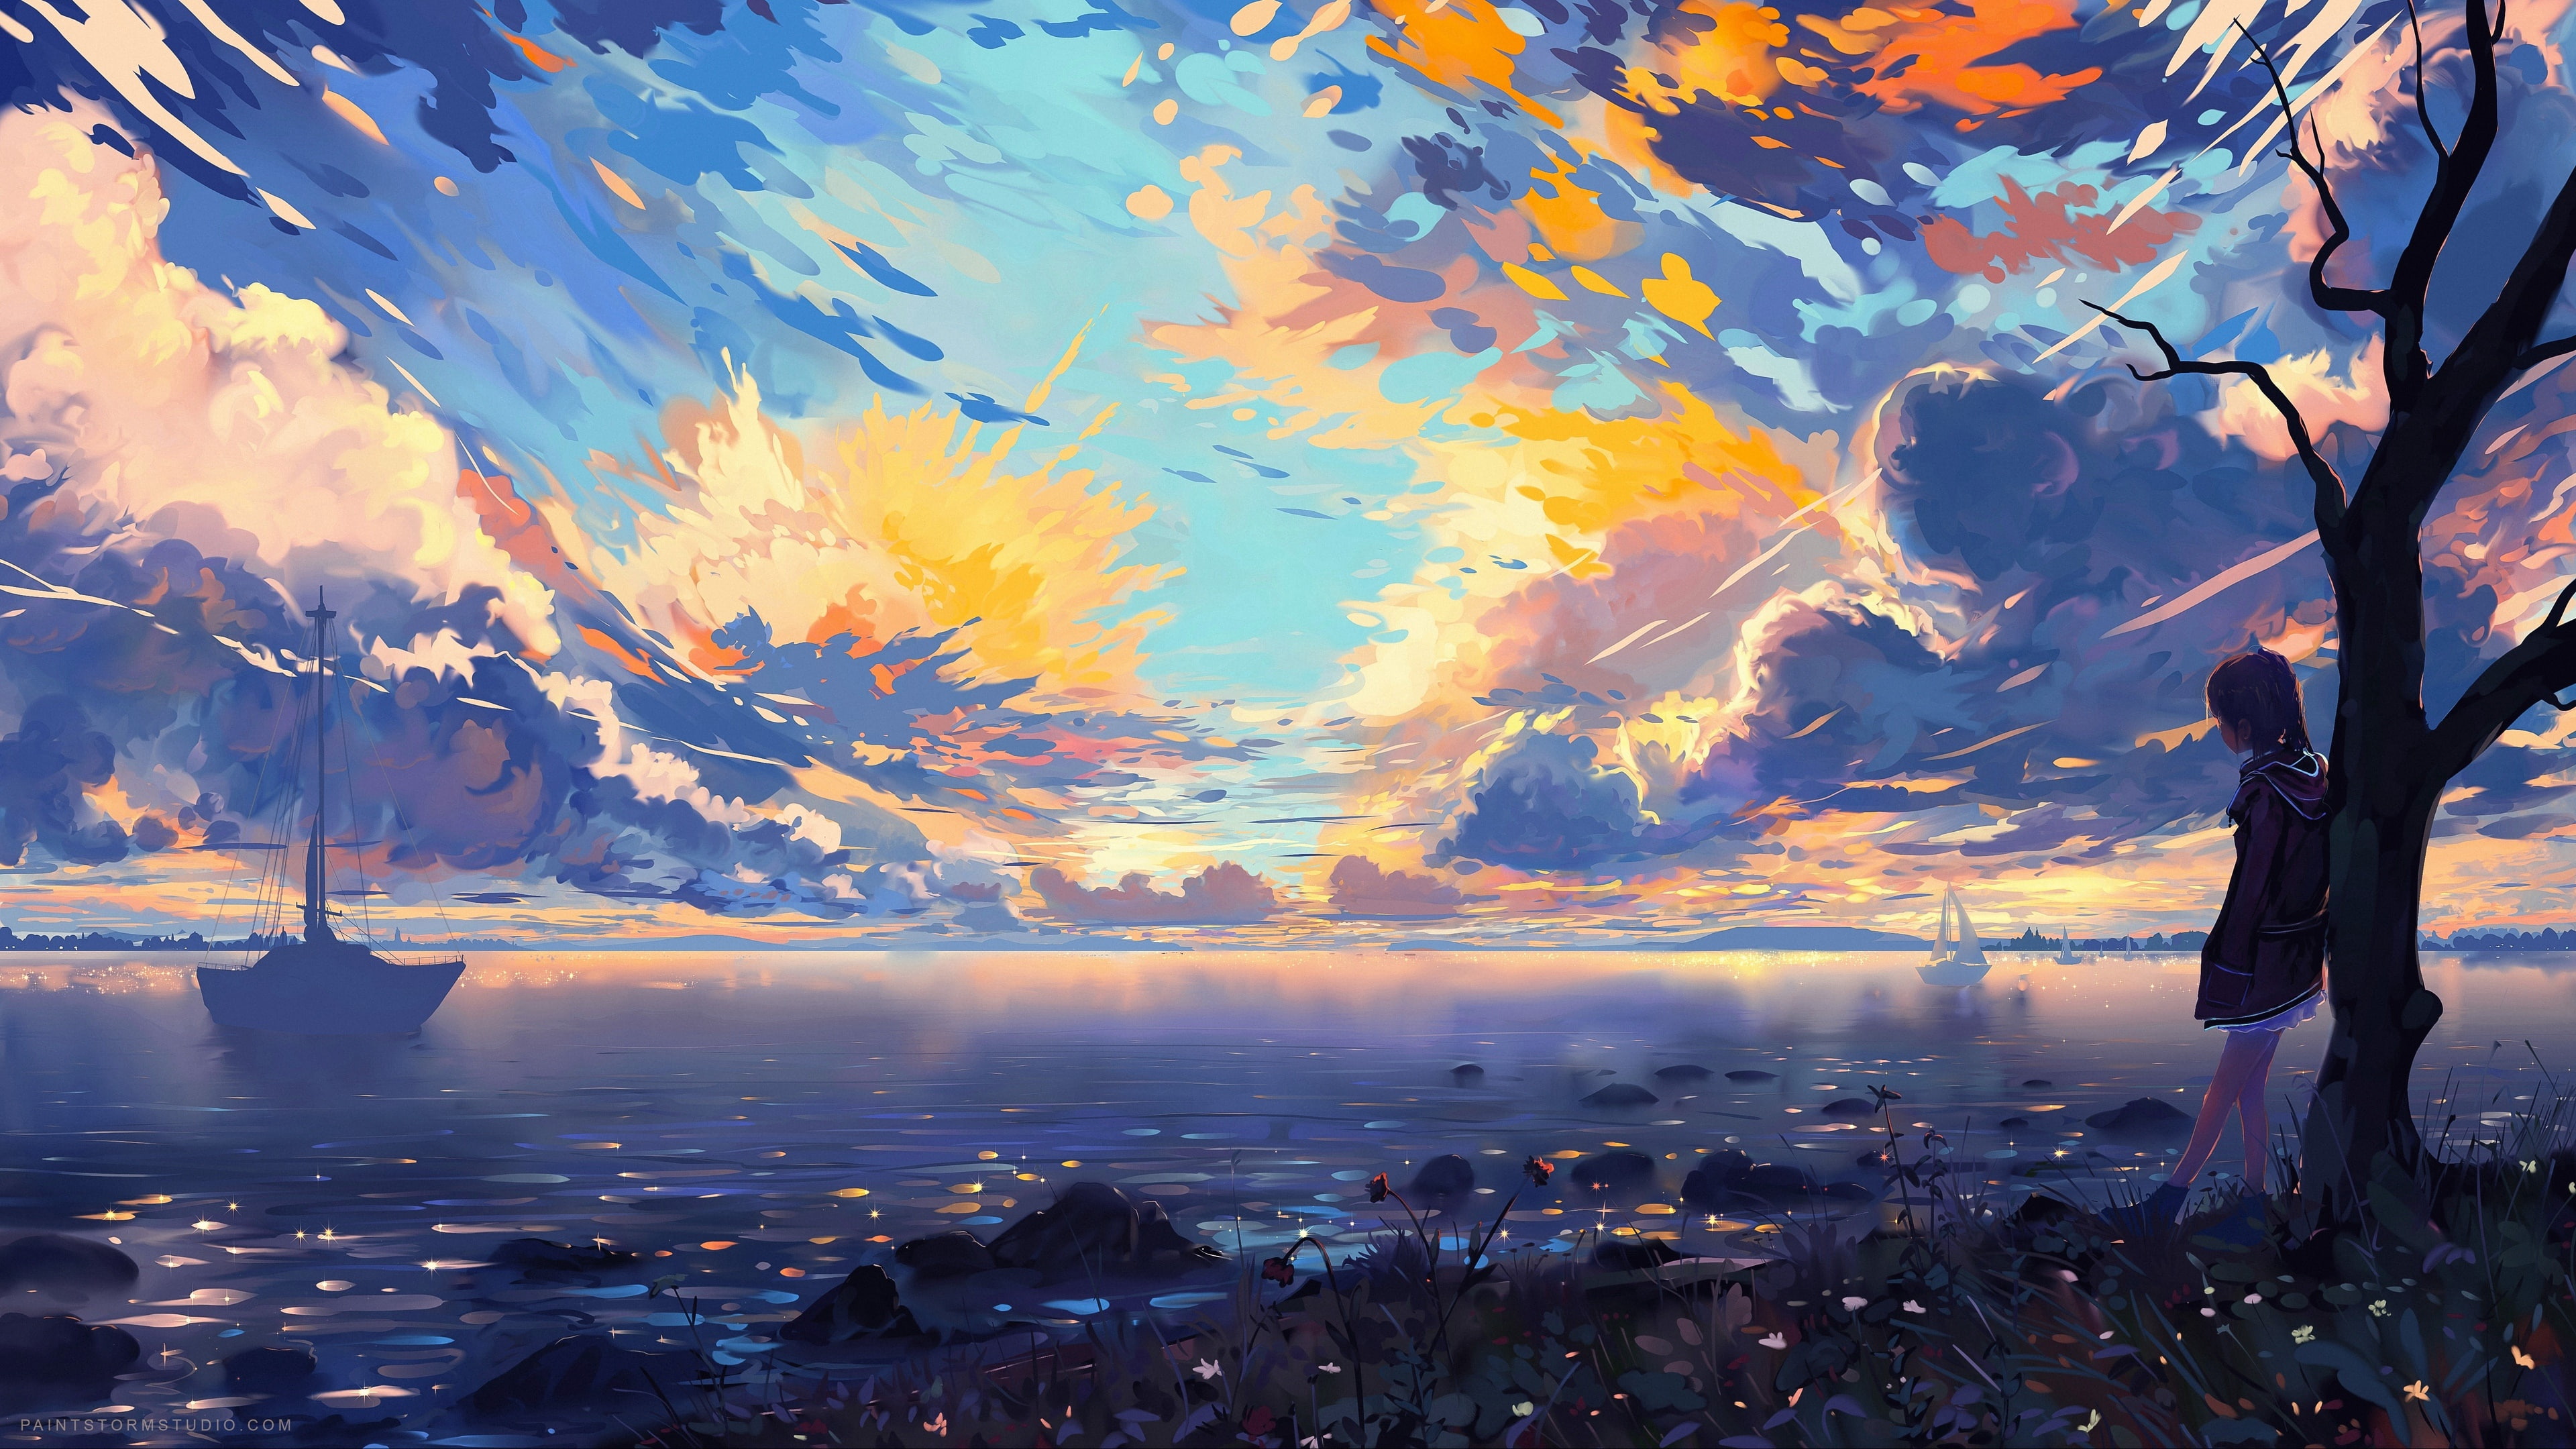 anime landscape, anime art, painting, sea, ship, painting art